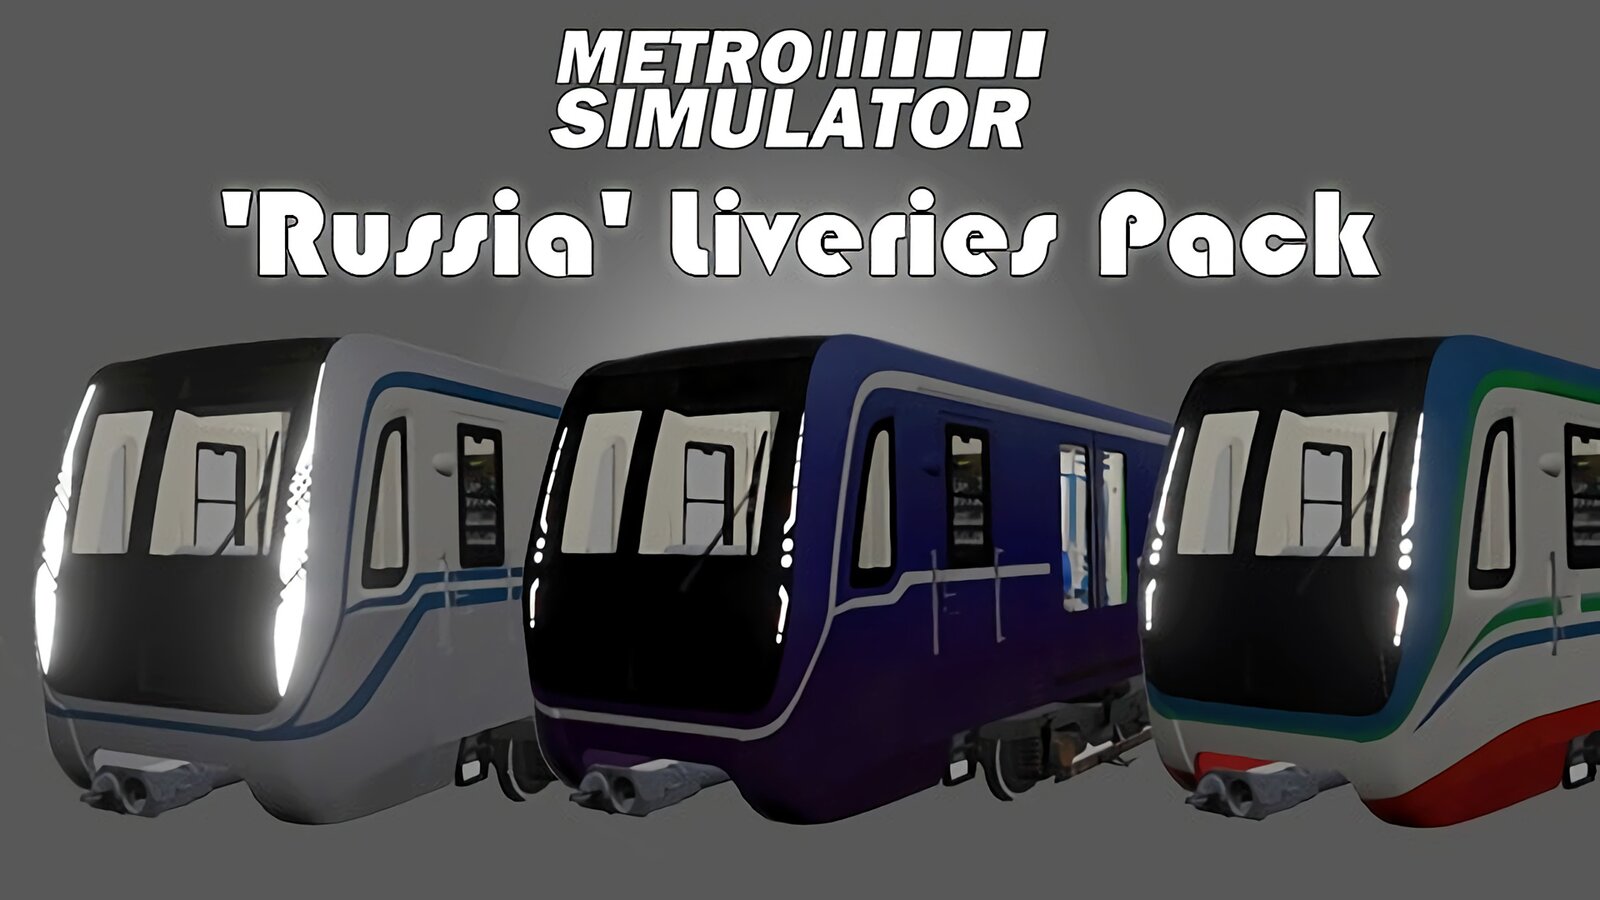 Metro Simulator - 'Russia' Liveries Pack